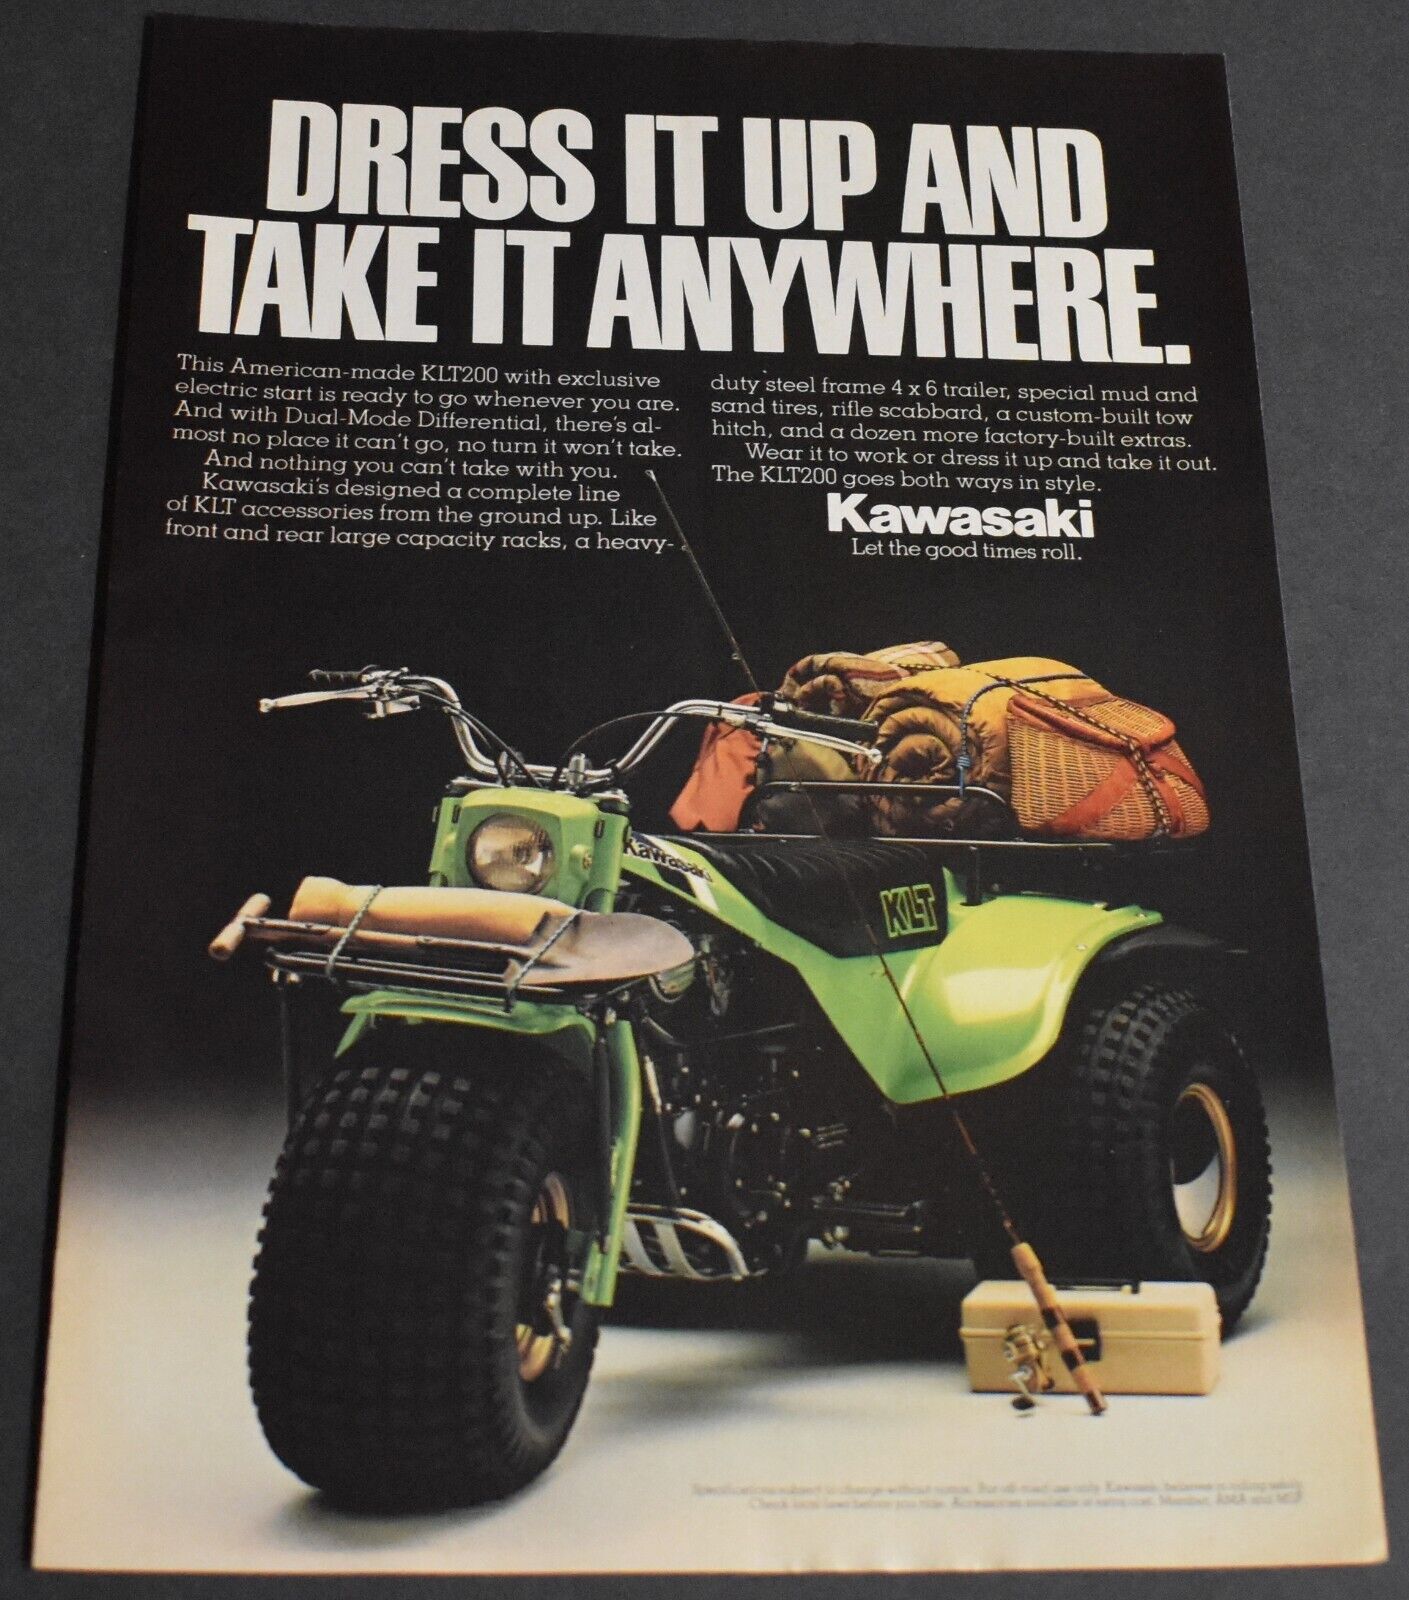 1981 Print Ad Kawasaki KLT200 3 Three Wheeler Dress it up Take Anywhere art pole